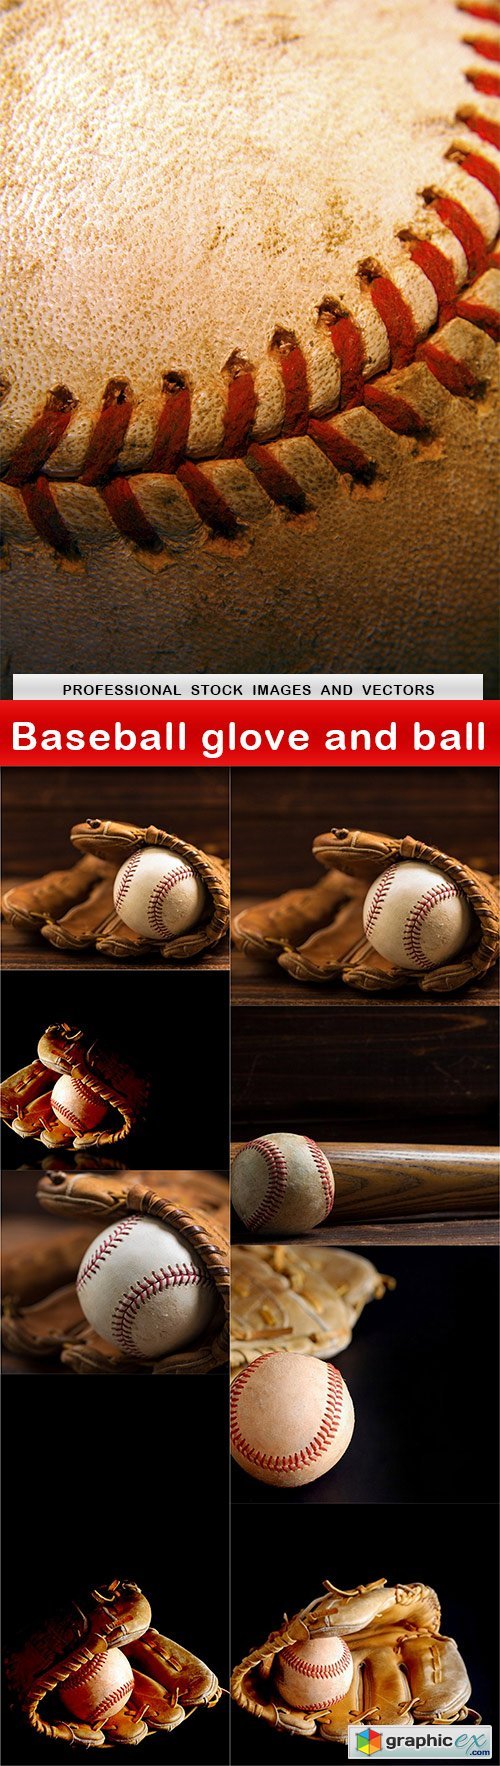 Baseball glove and ball - 9 UHQ JPEG